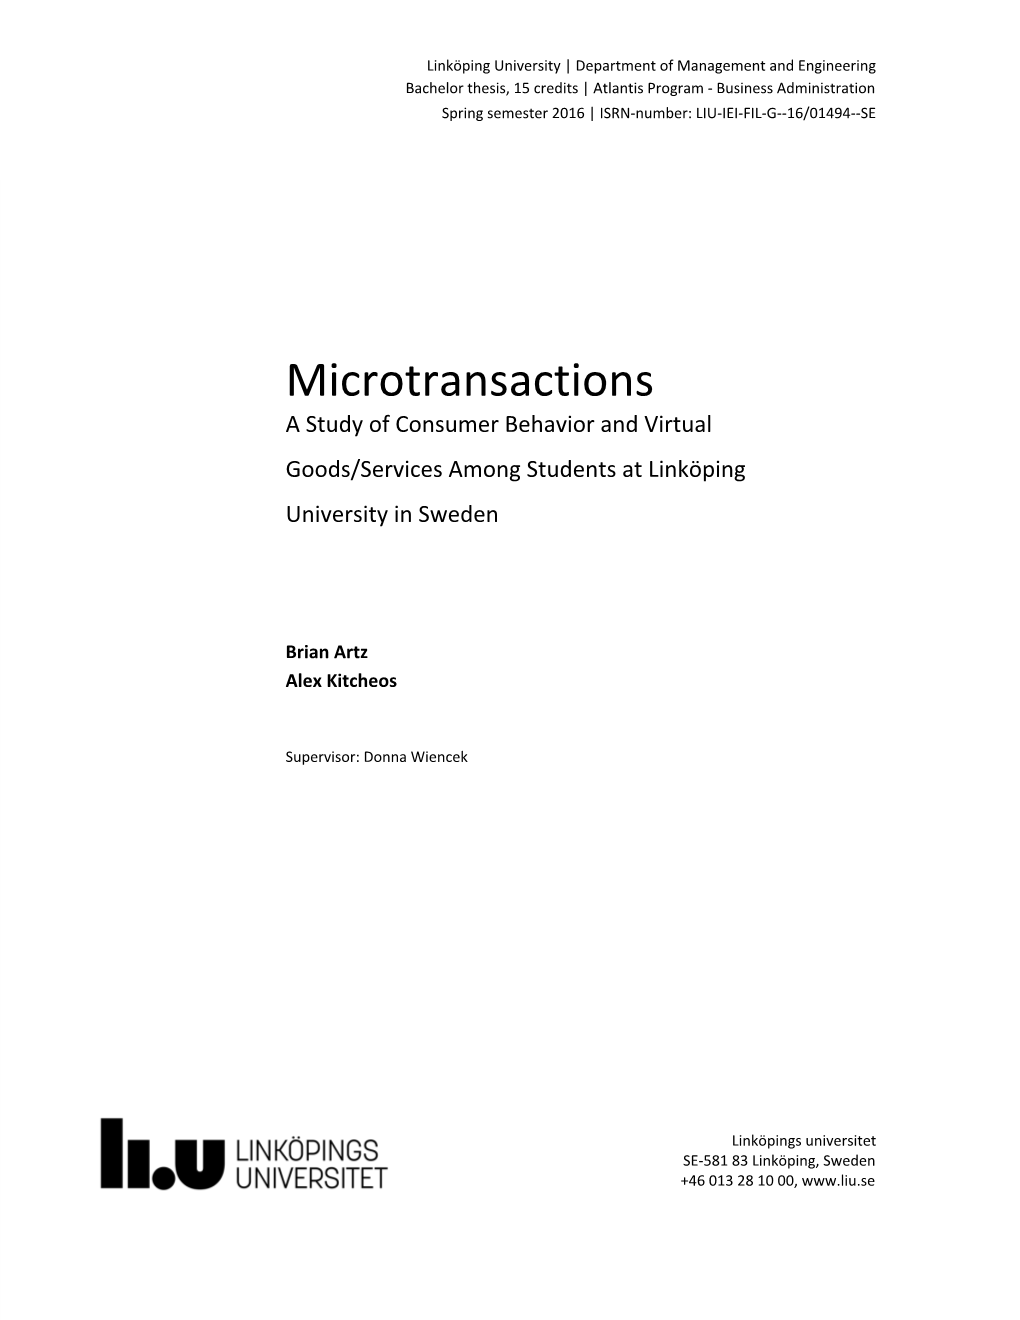 Microtransactions a Study of Consumer Behavior and Virtual